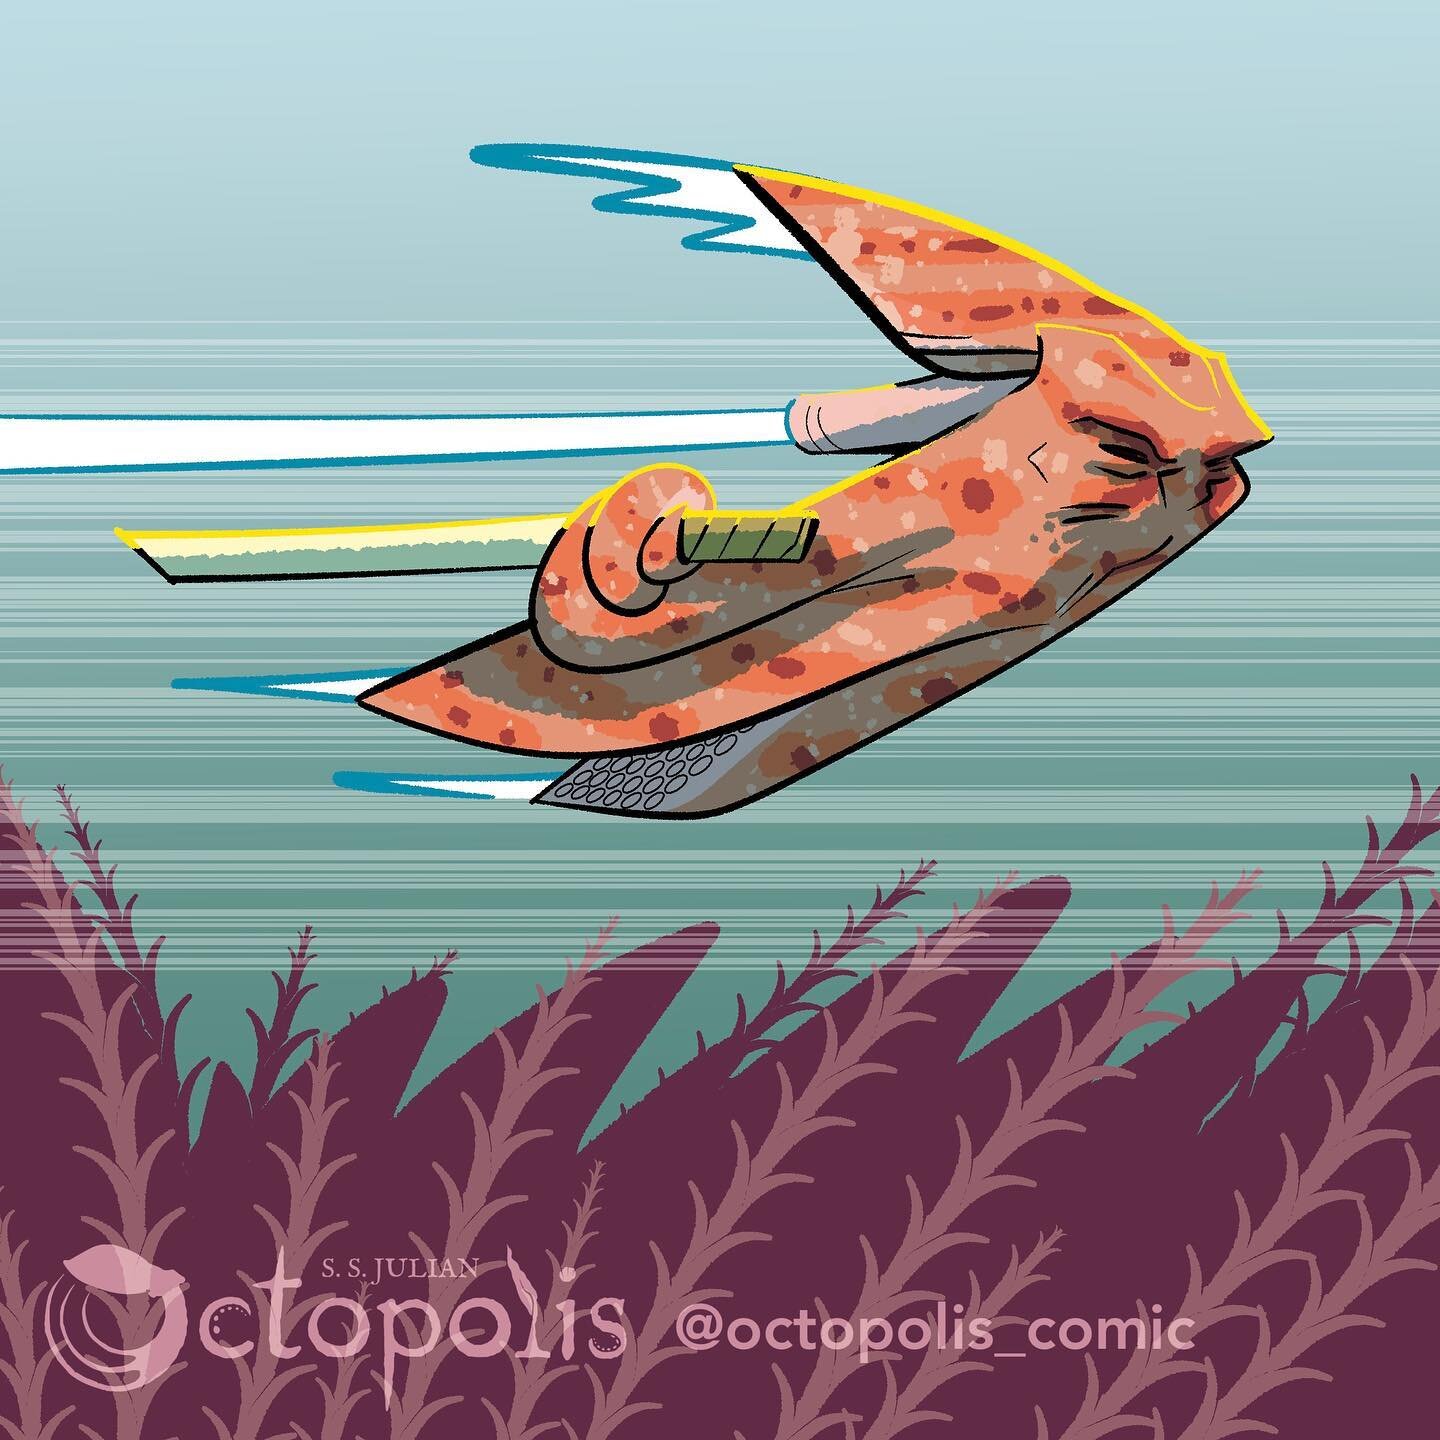 Speeding into the weekend

#octopus #swordfight #digitalart #color #process #comic